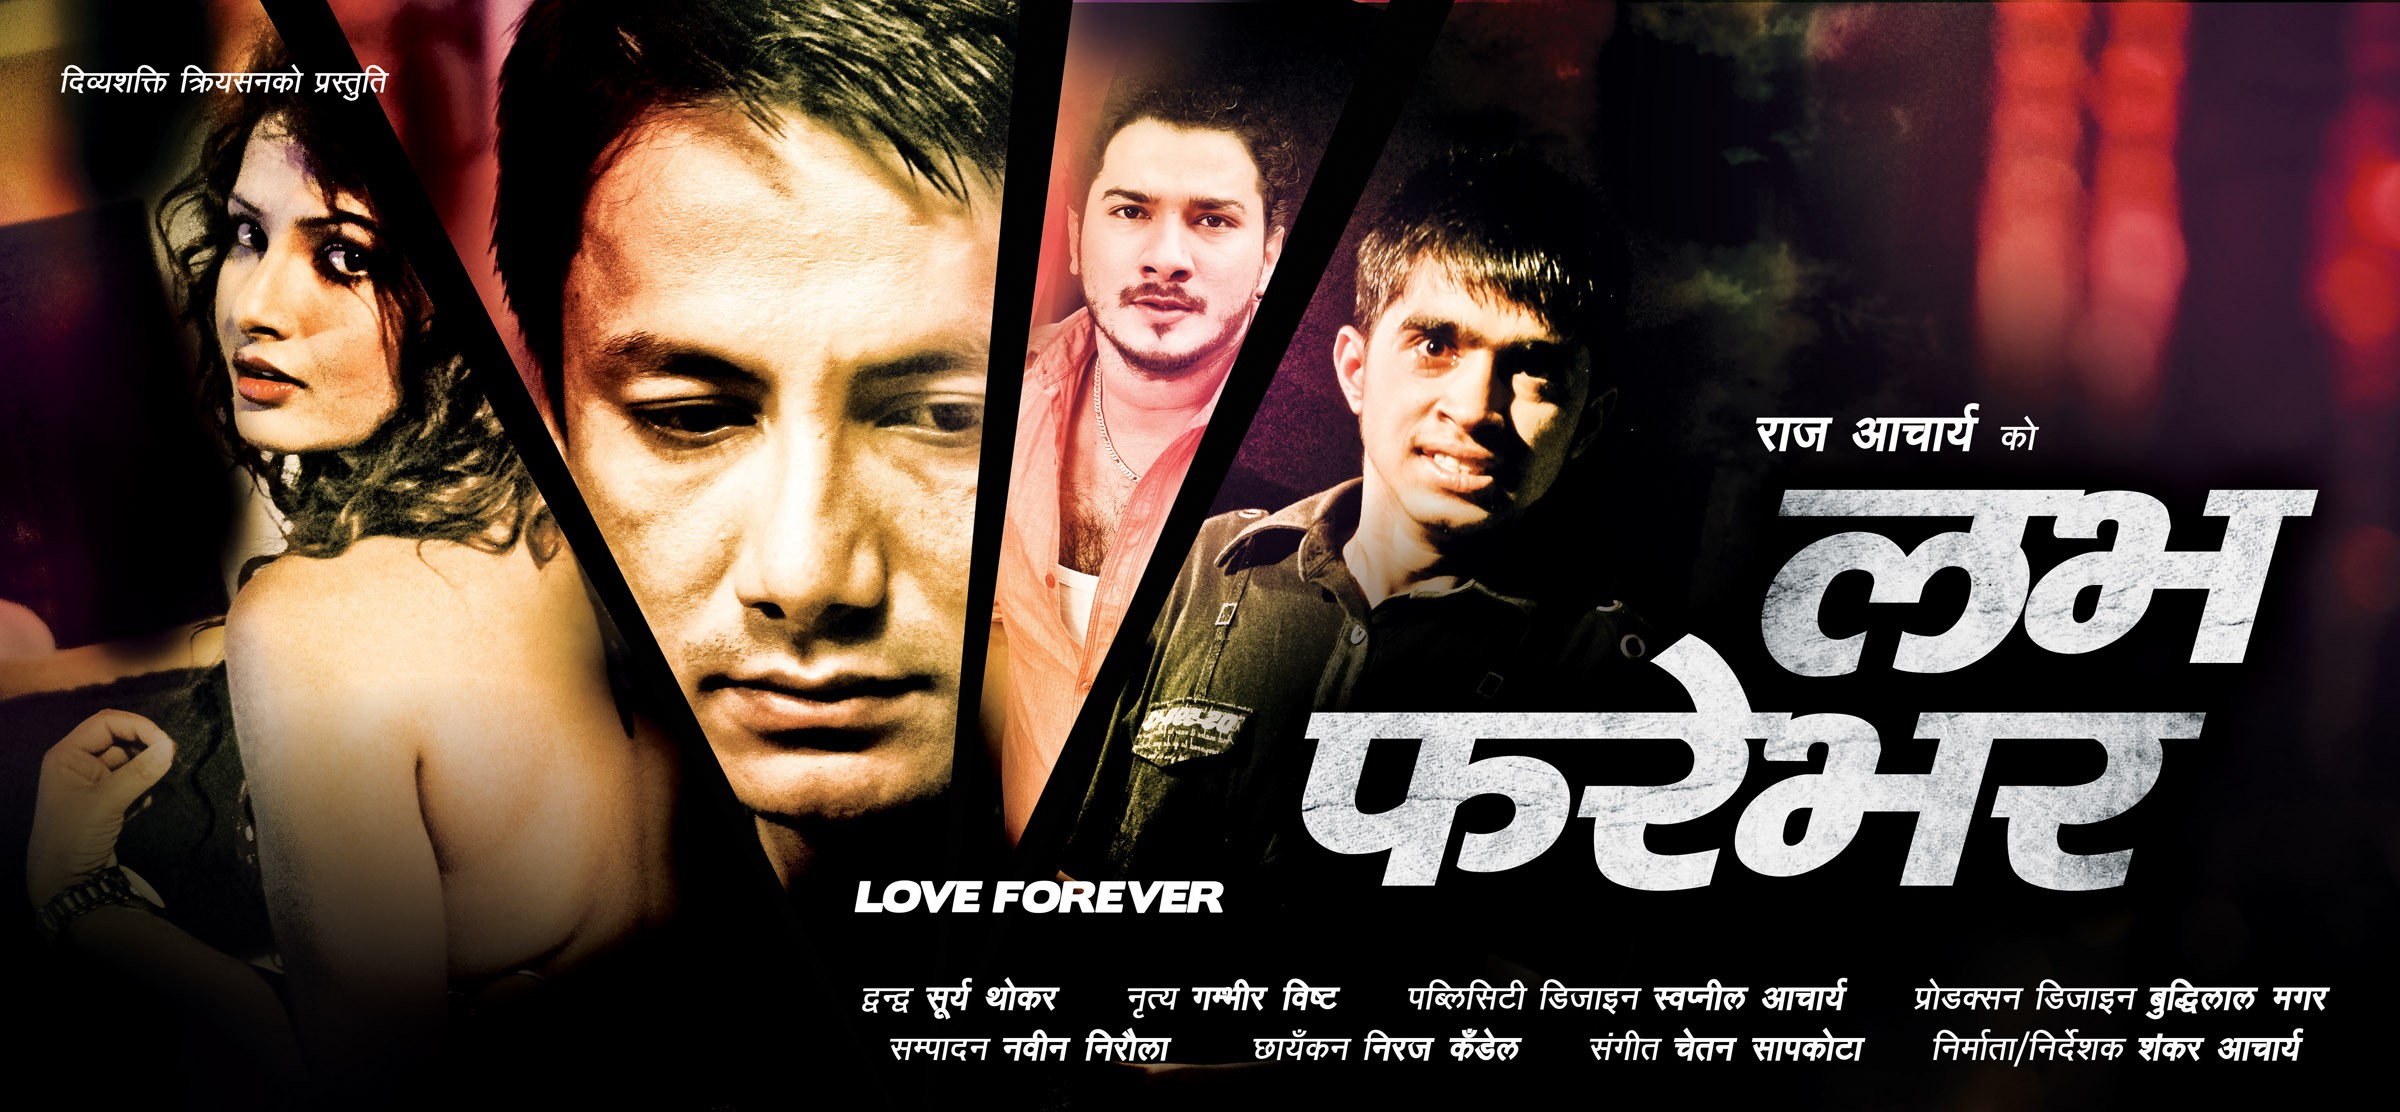 Mega Sized Movie Poster Image for Love Forever (#2 of 3)